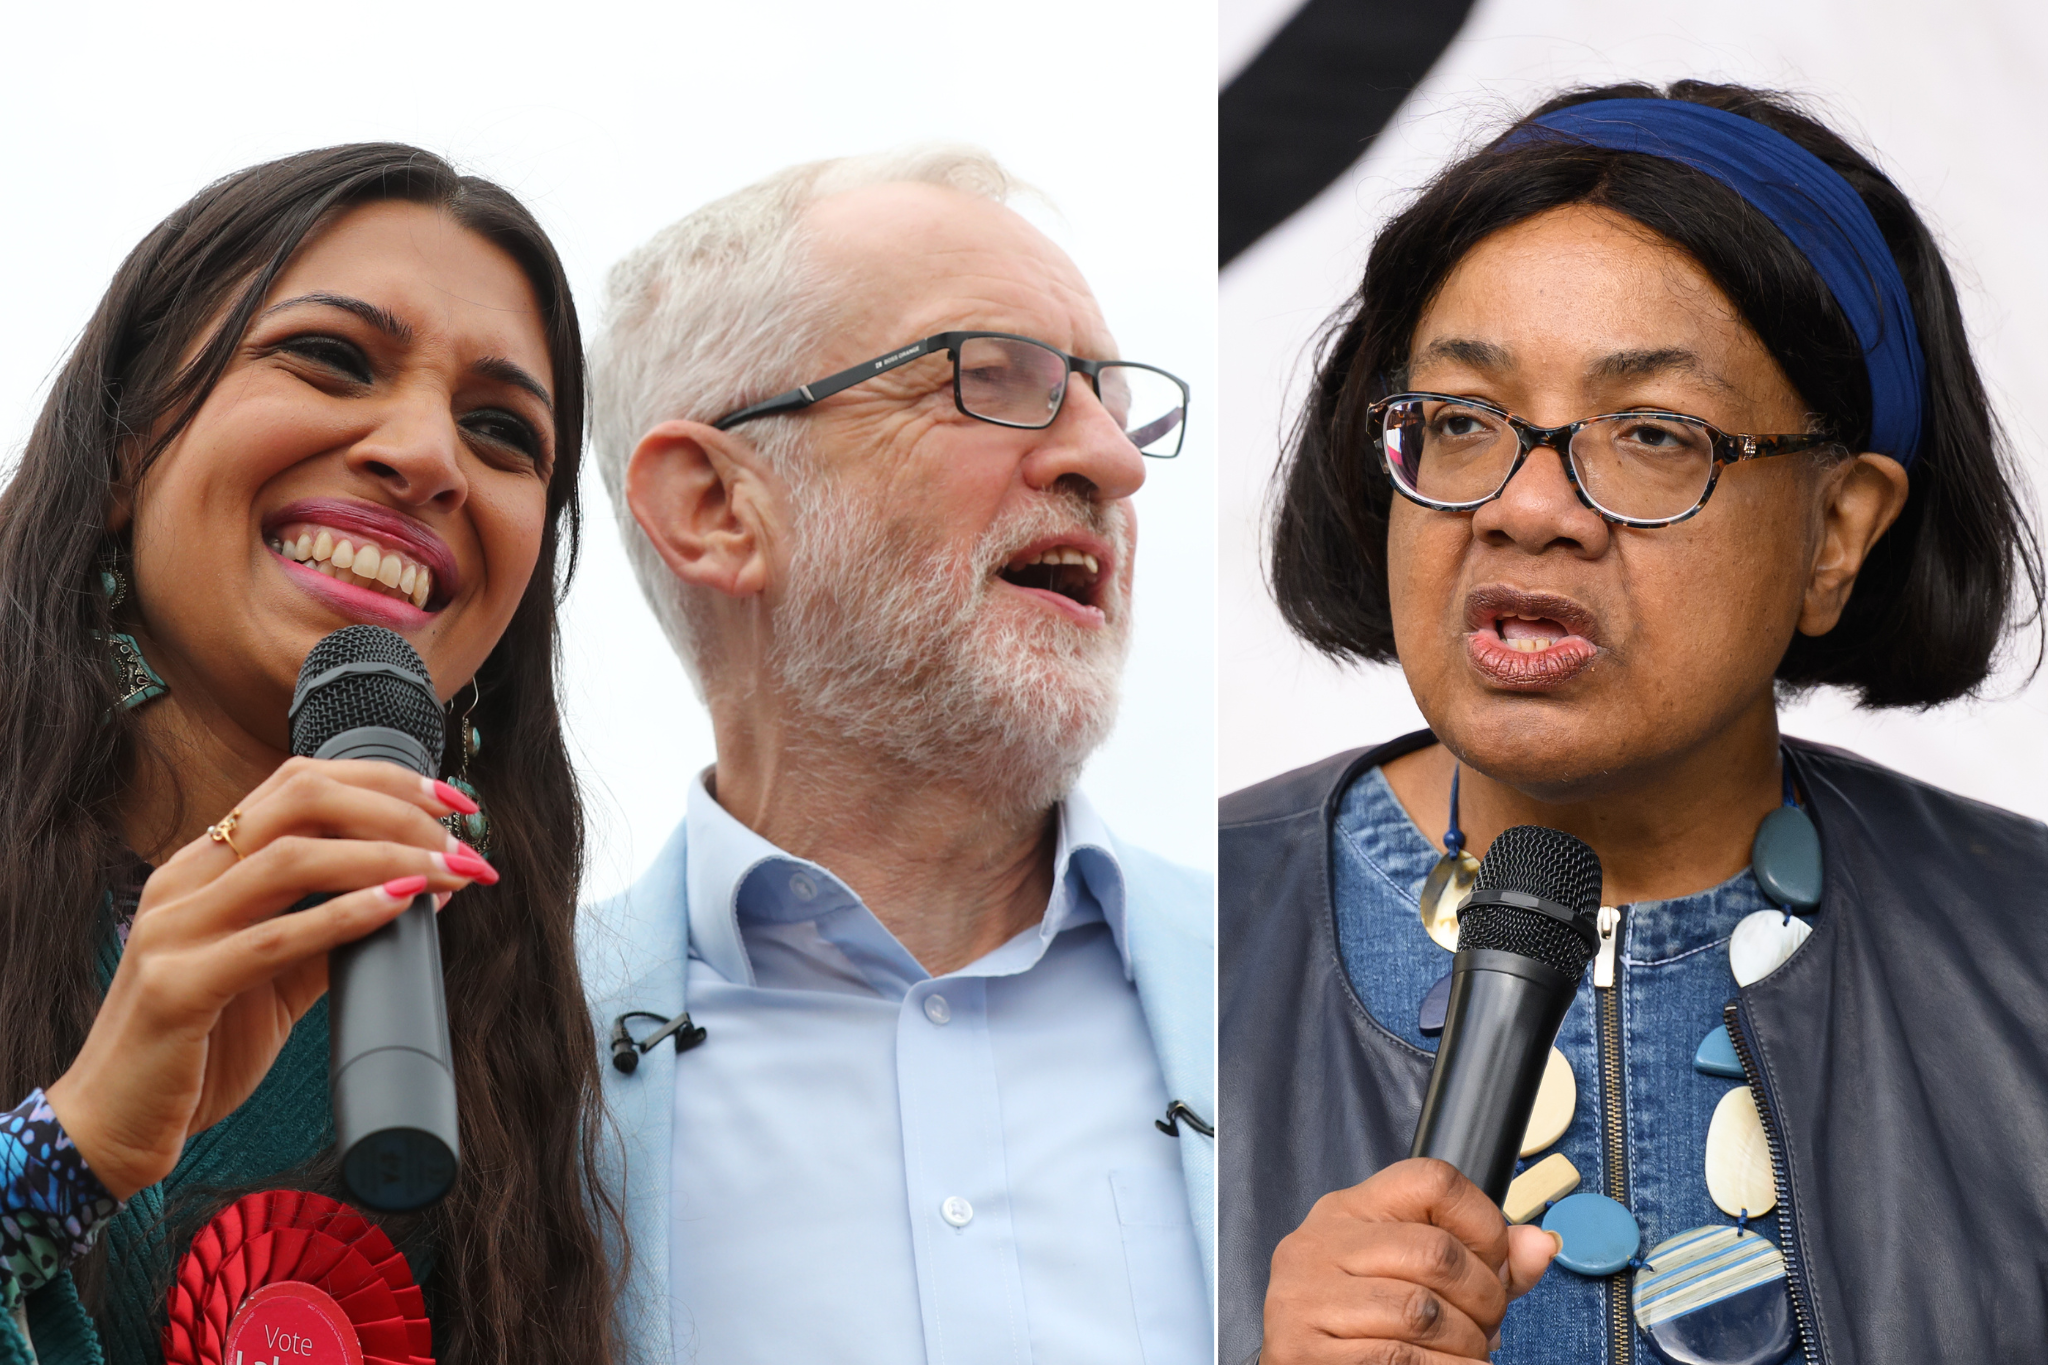 Faiza Shaheen, Jeremy Corbyn, and Diane Abbott (L to R)